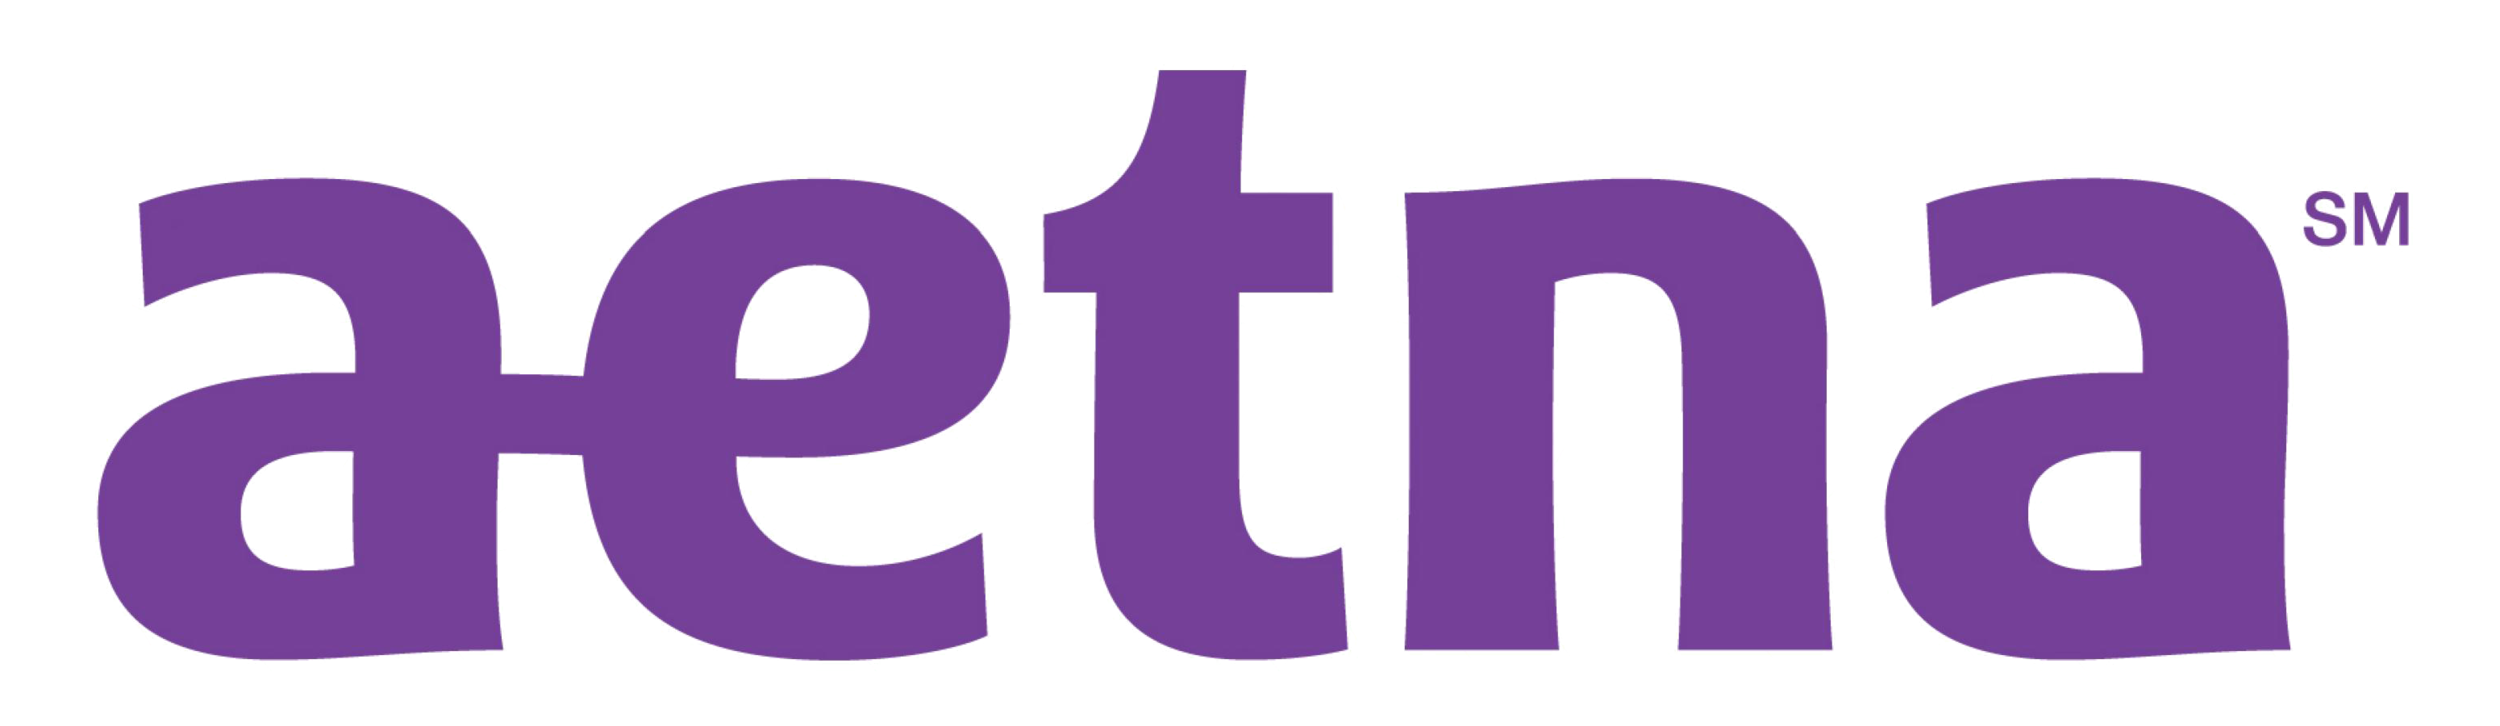 Aetna-Logo-PNG-Transparent-1.png